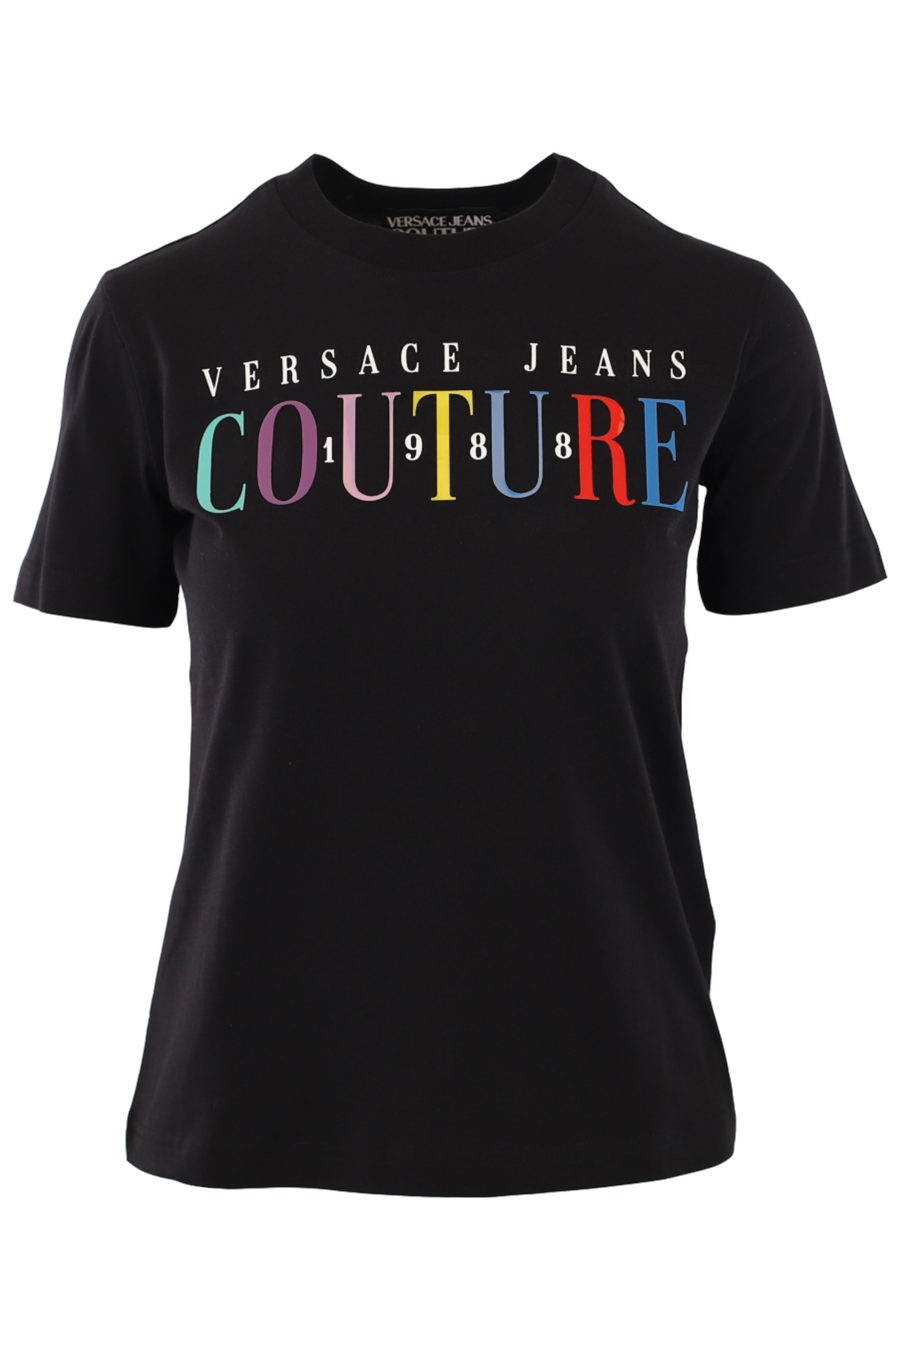 T-shirt preta com logótipo multicolorido no centro - IMG 0828